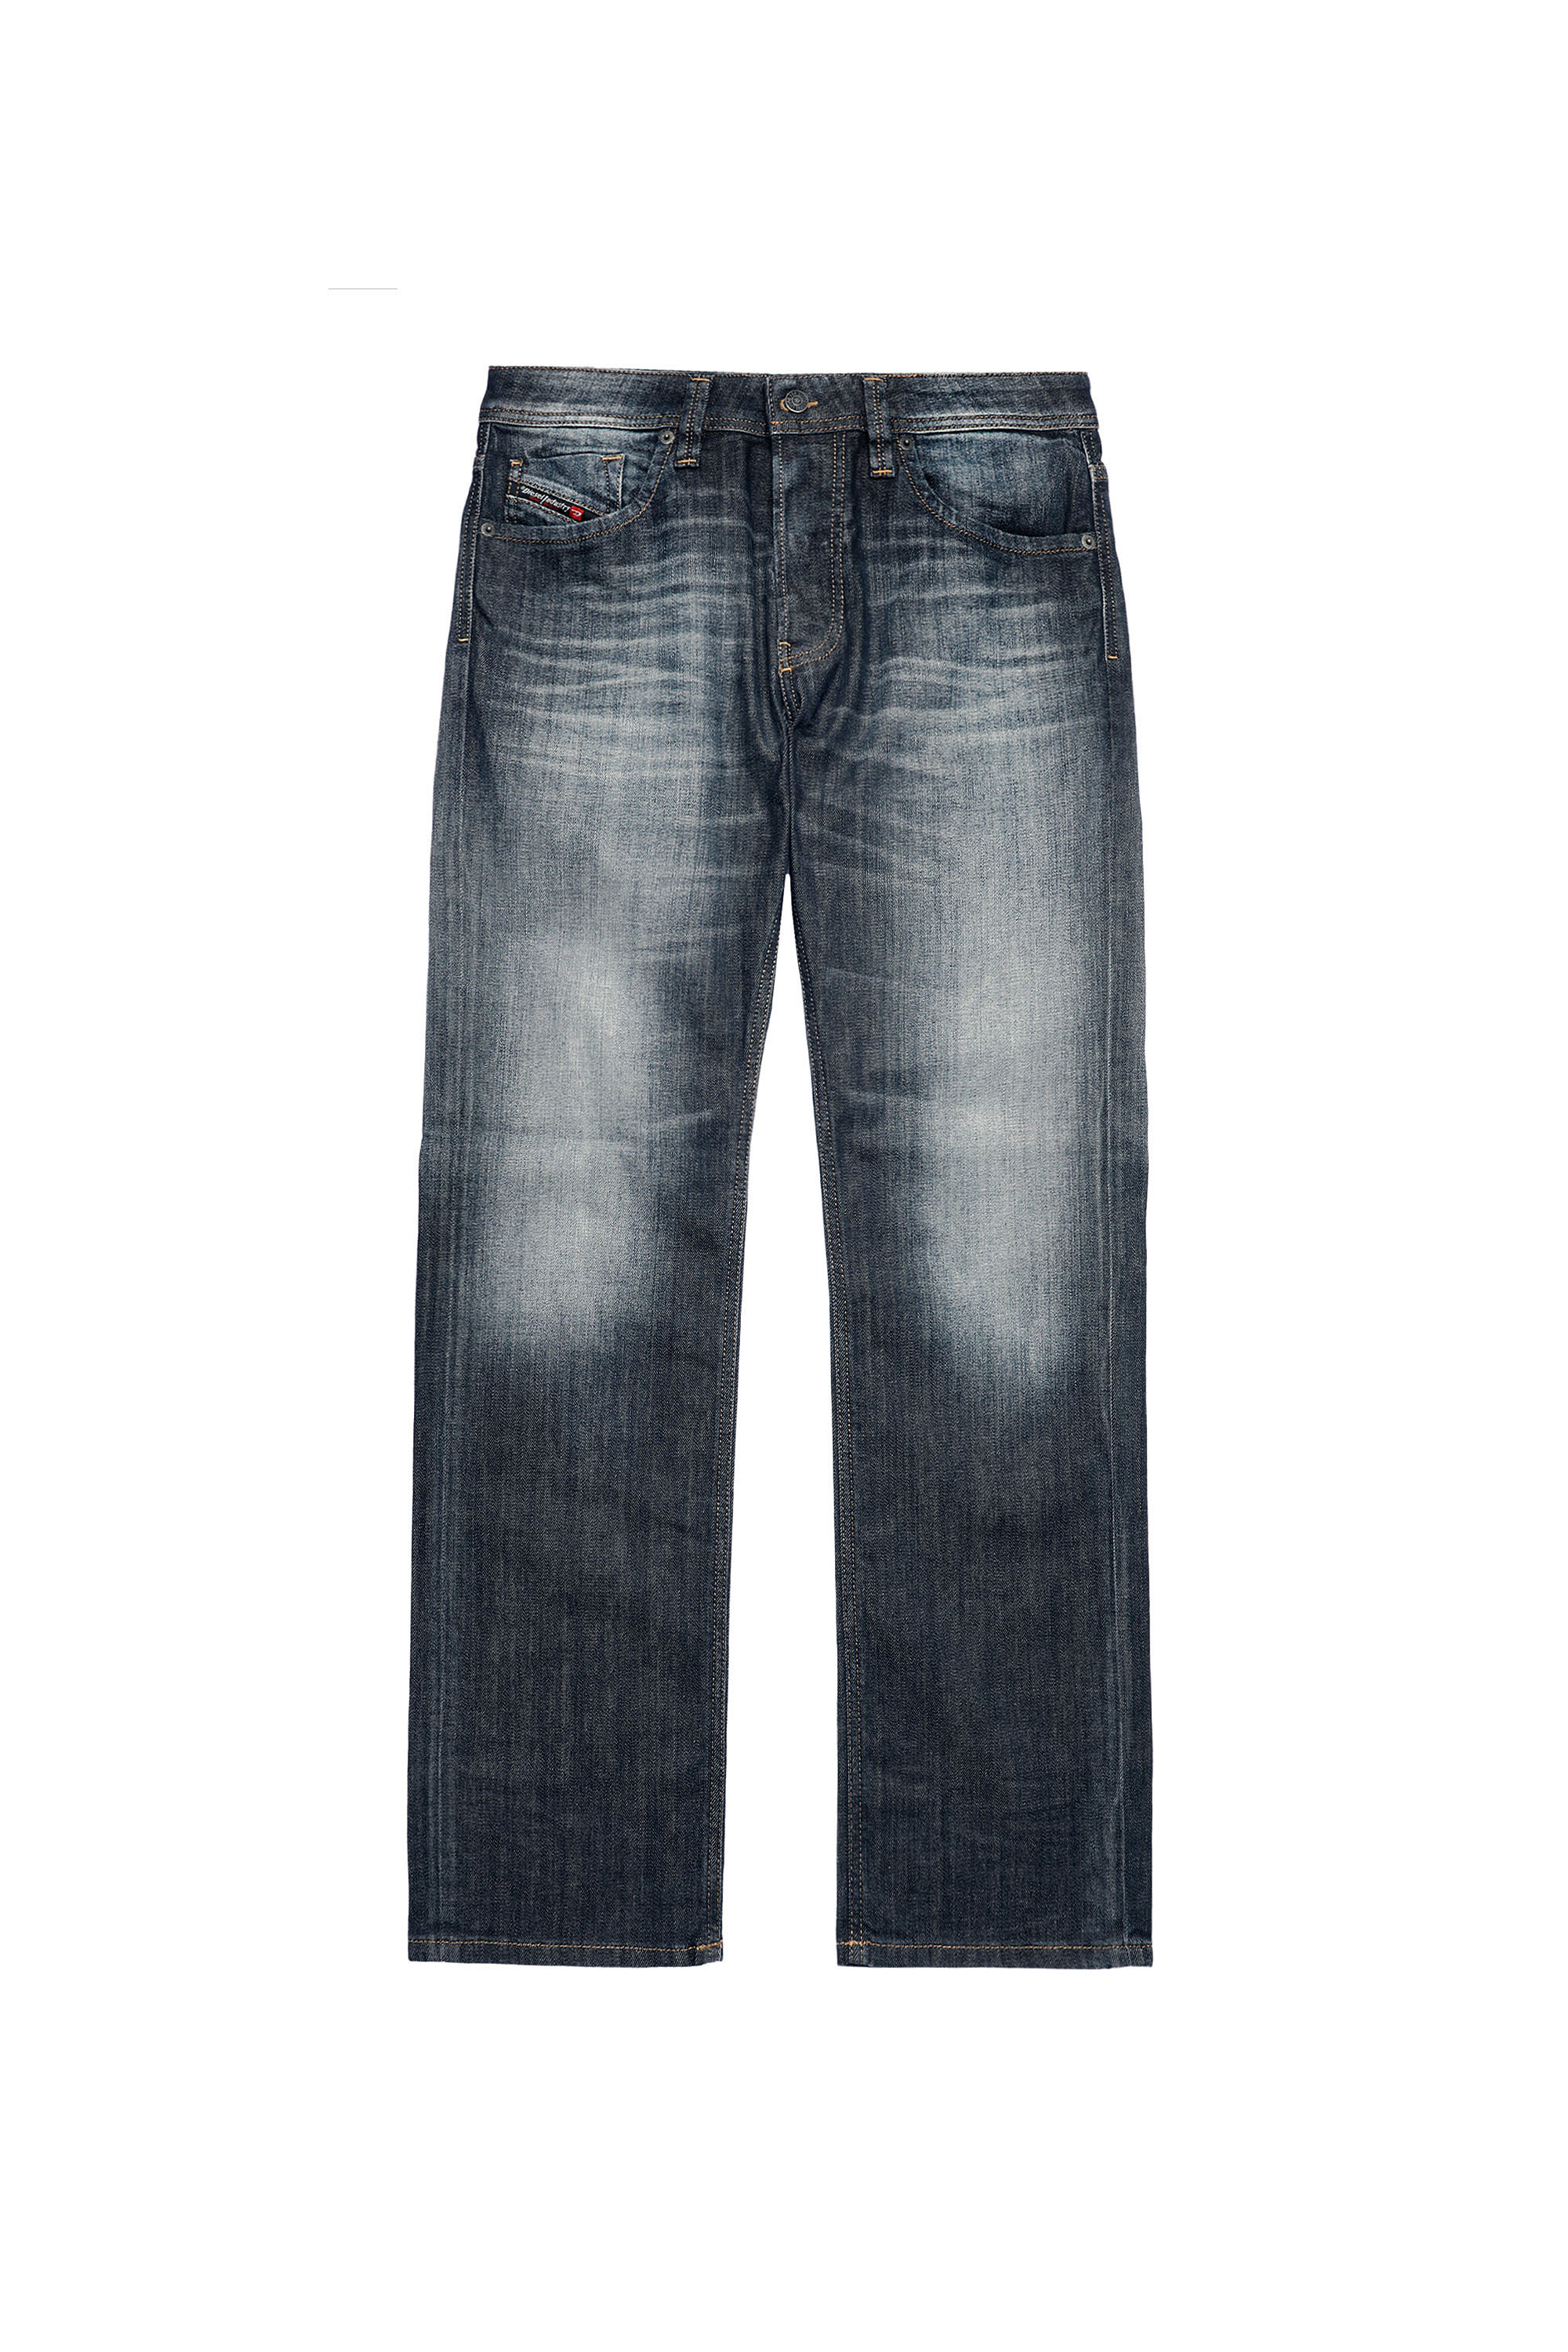 Diesel - Larkee 009EP Straight Jeans,  - Image 7